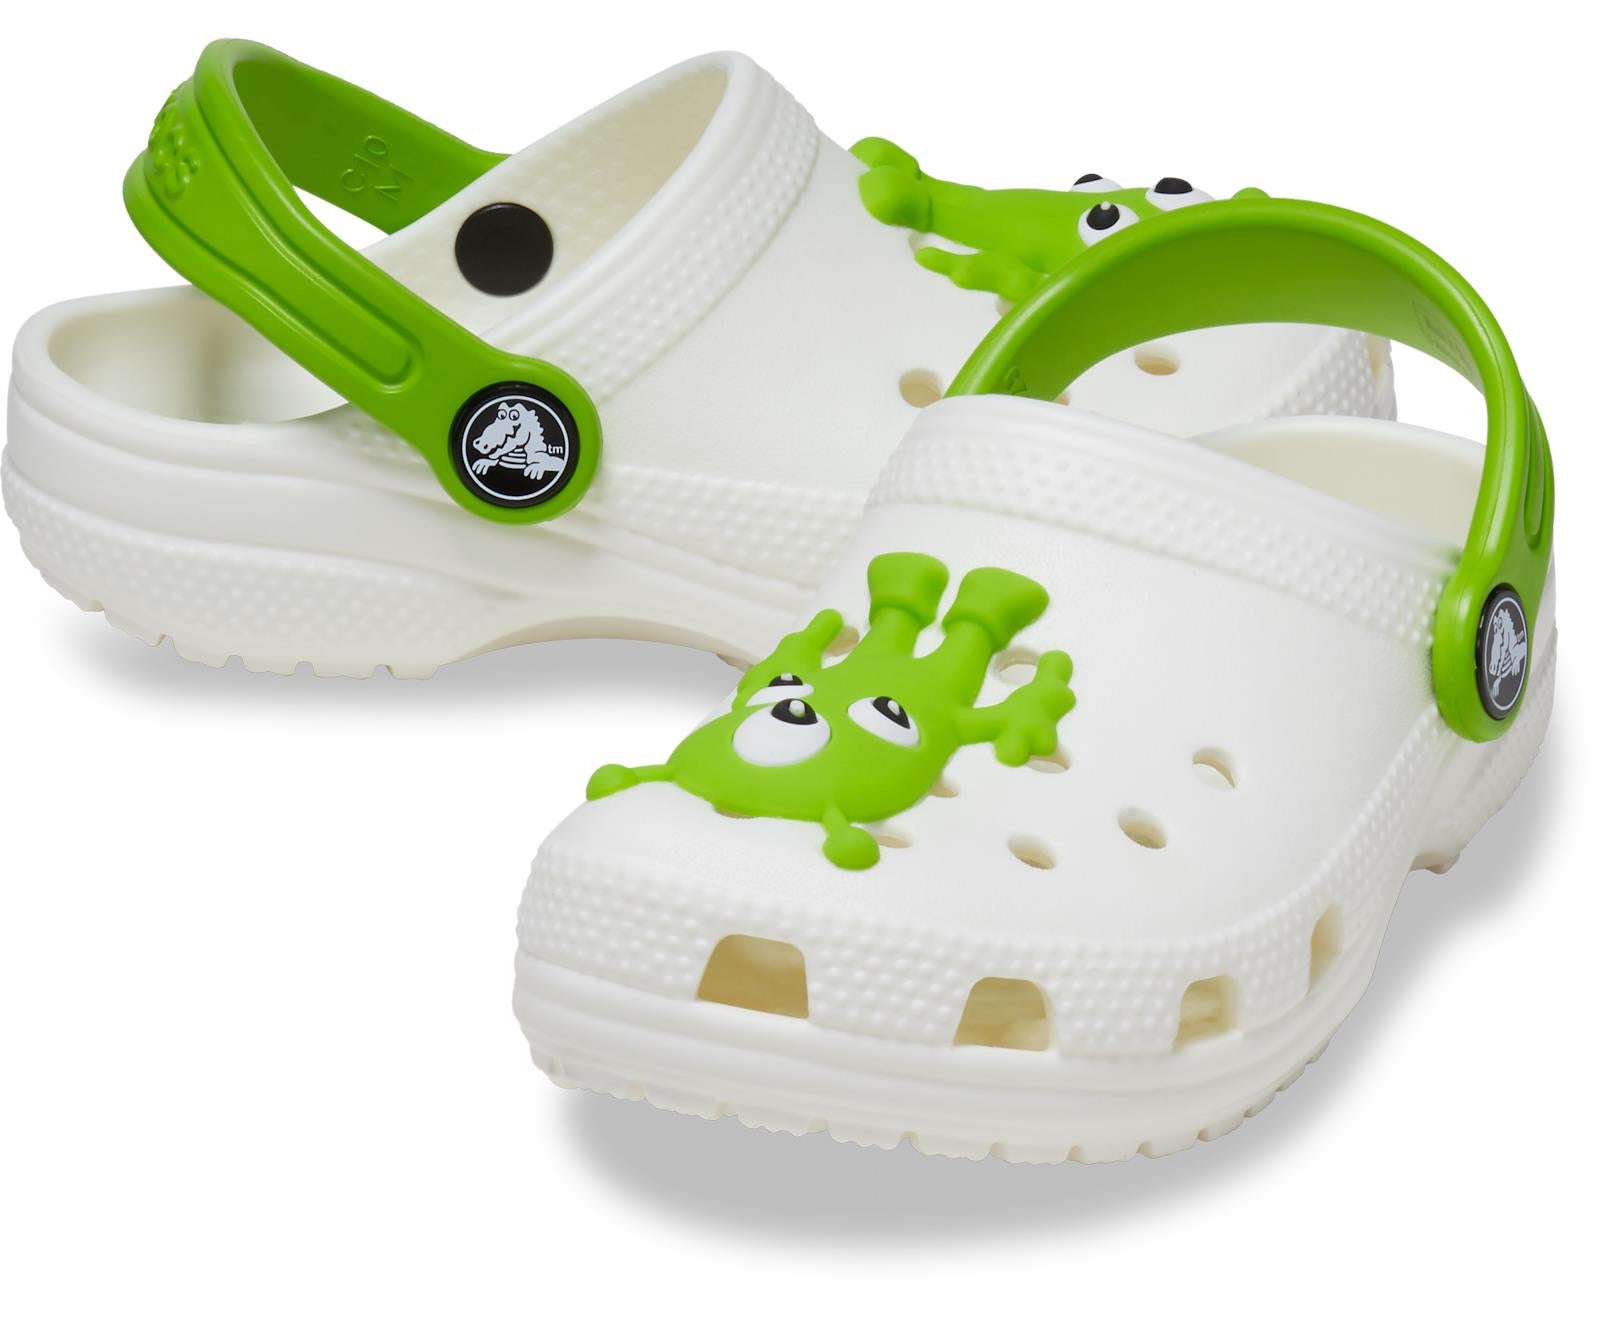 Crocs Classic Alien toddlers crocband mule sandal #208653